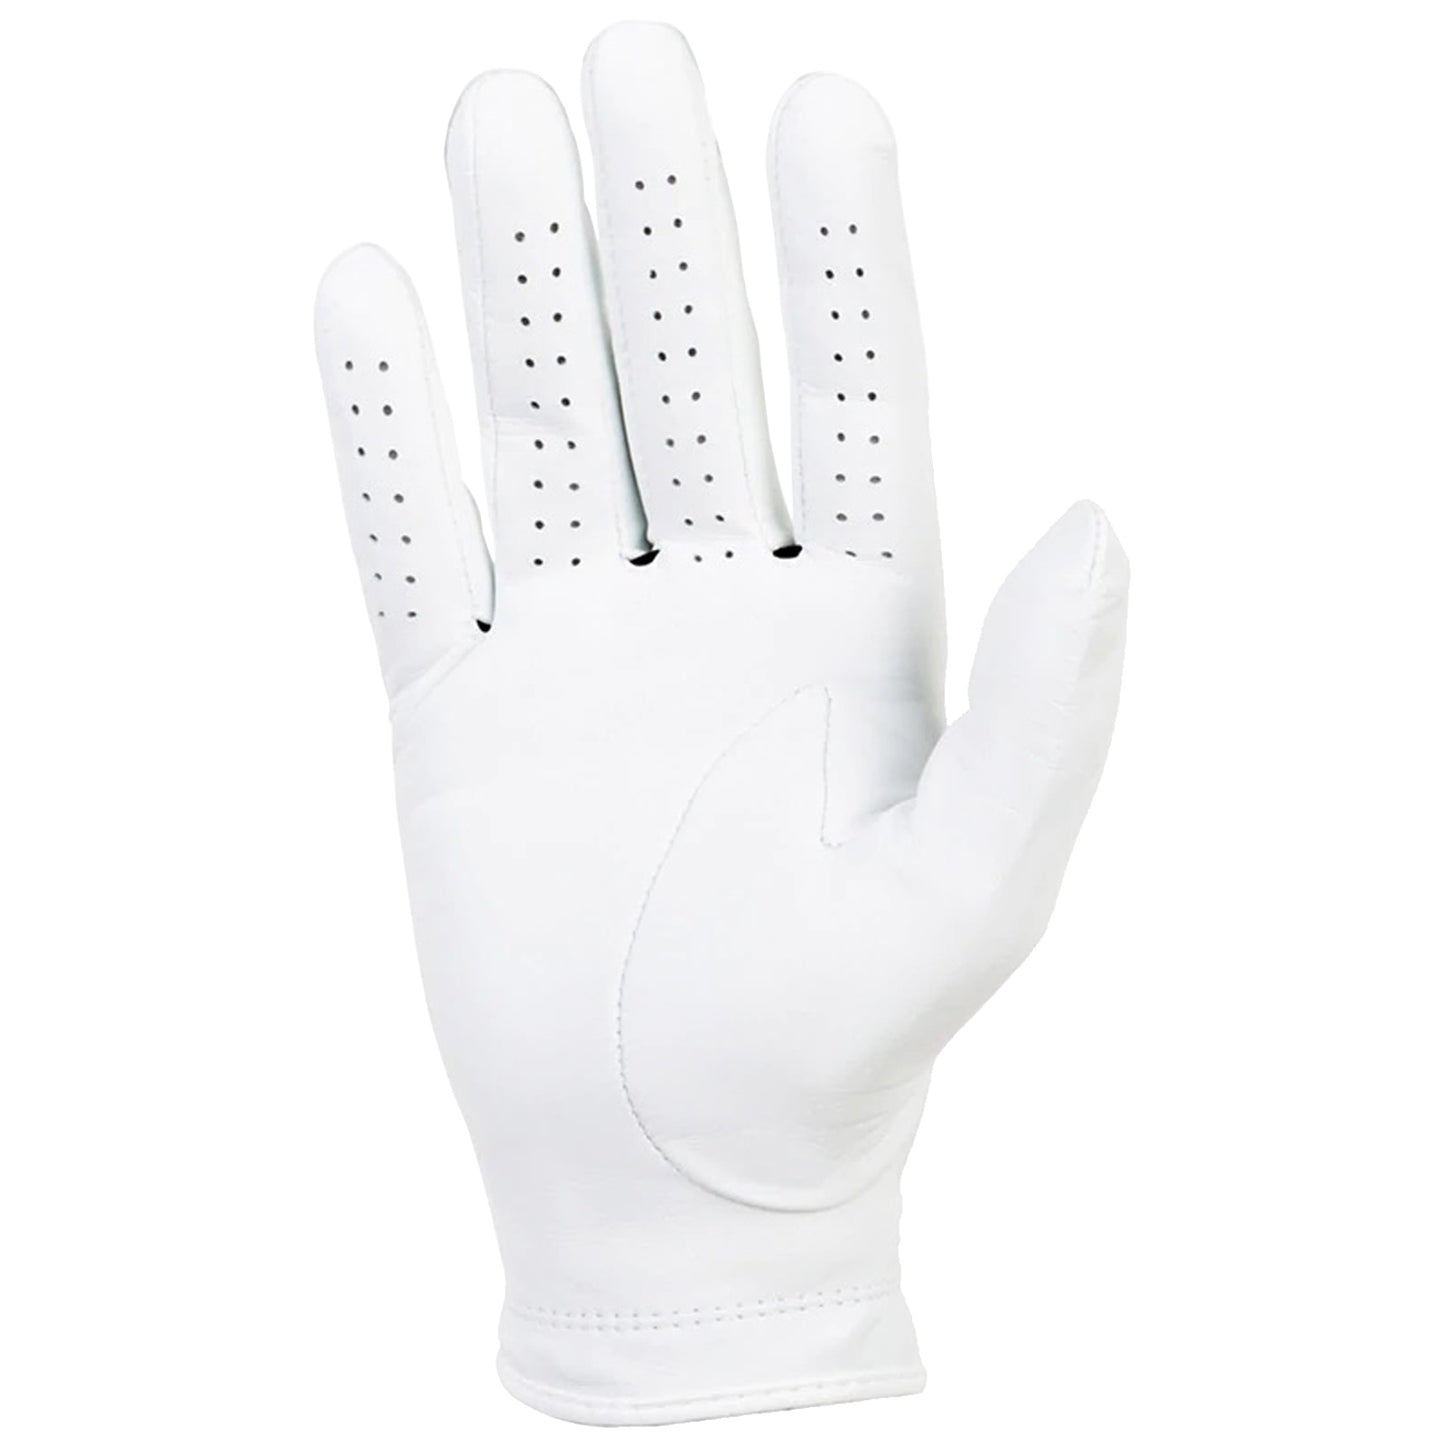 Titleist Mens Players Right Hand Golf Glove